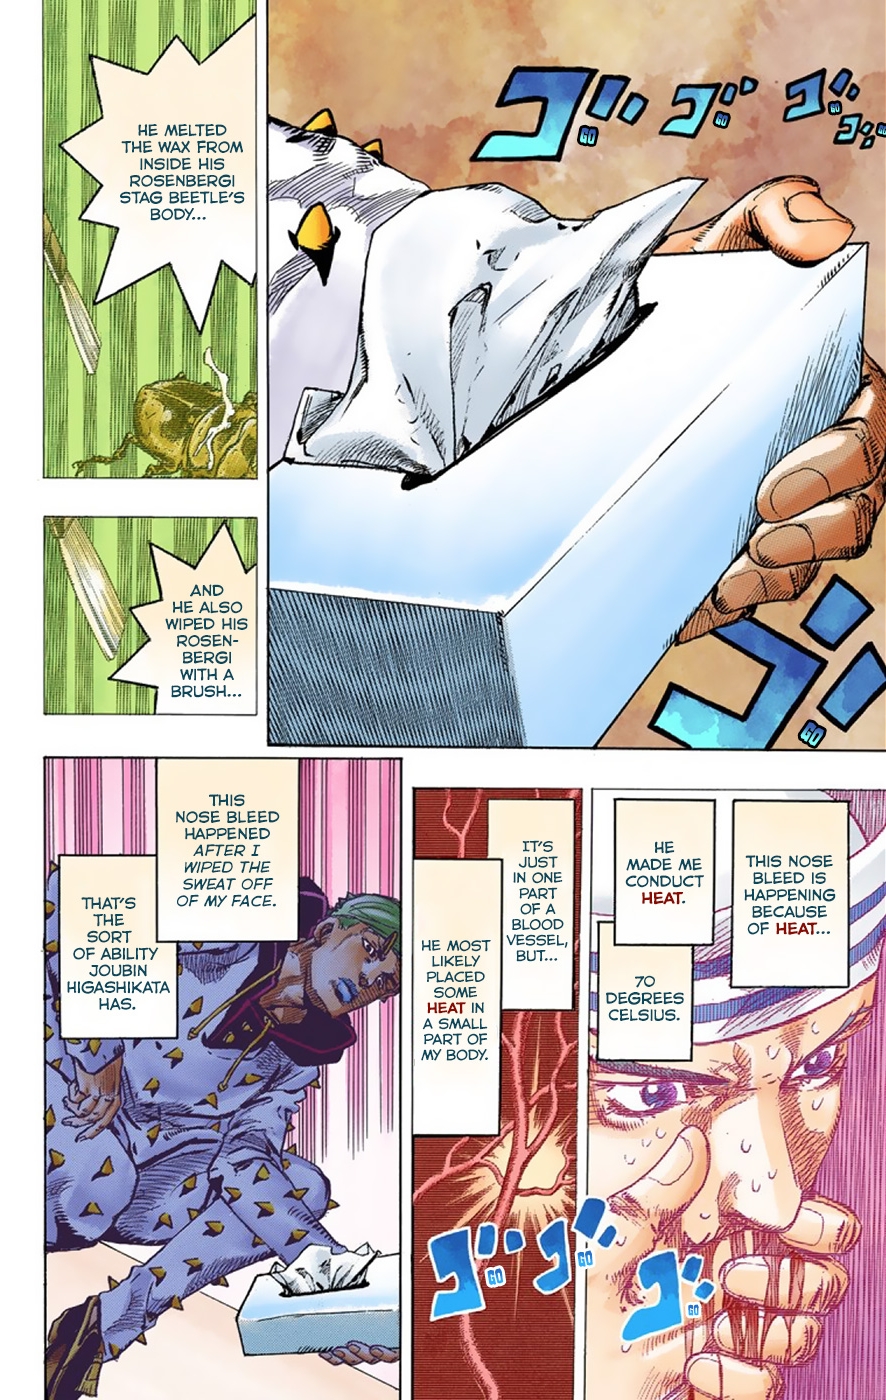 JoJo's Bizarre Adventure Part 8 JoJolion [Official Colored] Vol. 9 Ch. 38 Jobin Higashikata is a Stand User